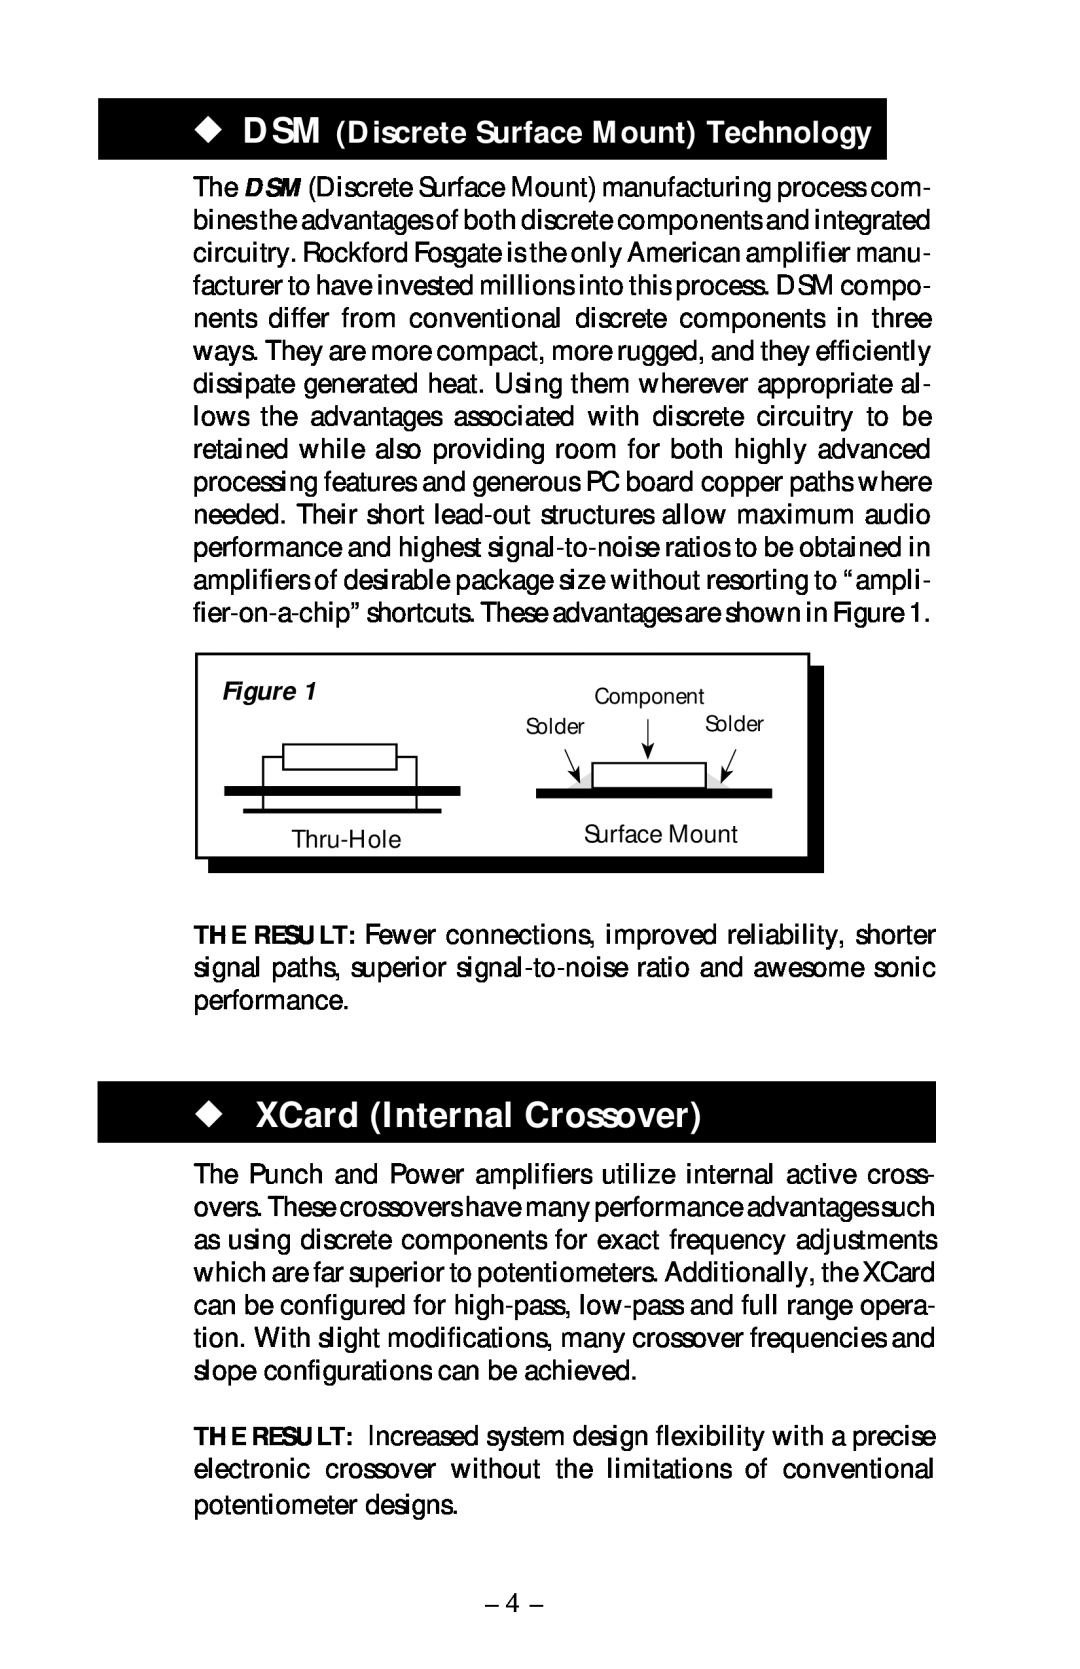 Rockford Fosgate 400x4 operation manual XCard Internal Crossover, DSM Discrete Surface Mount Technology 